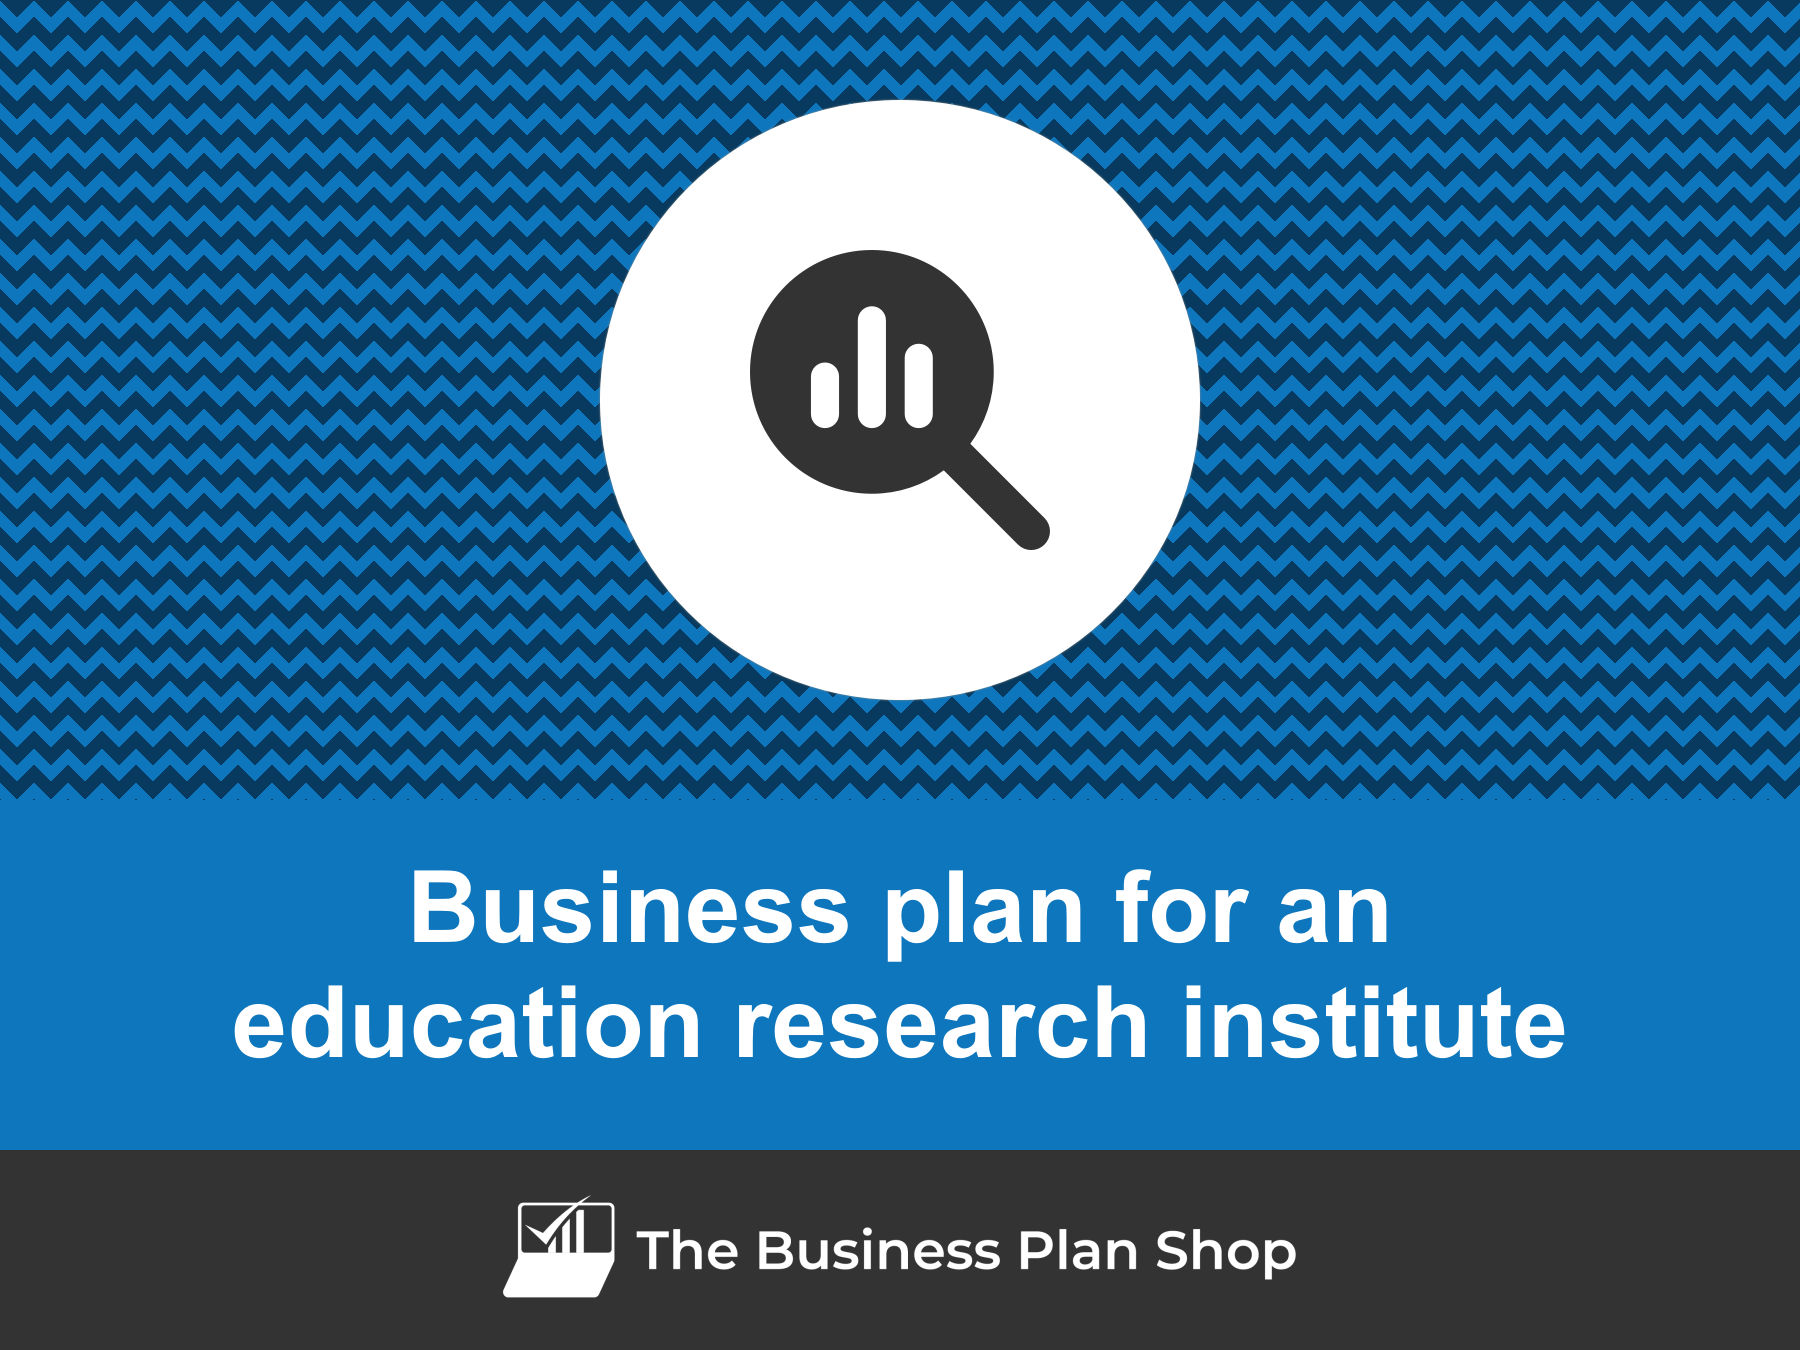 srce education business plan